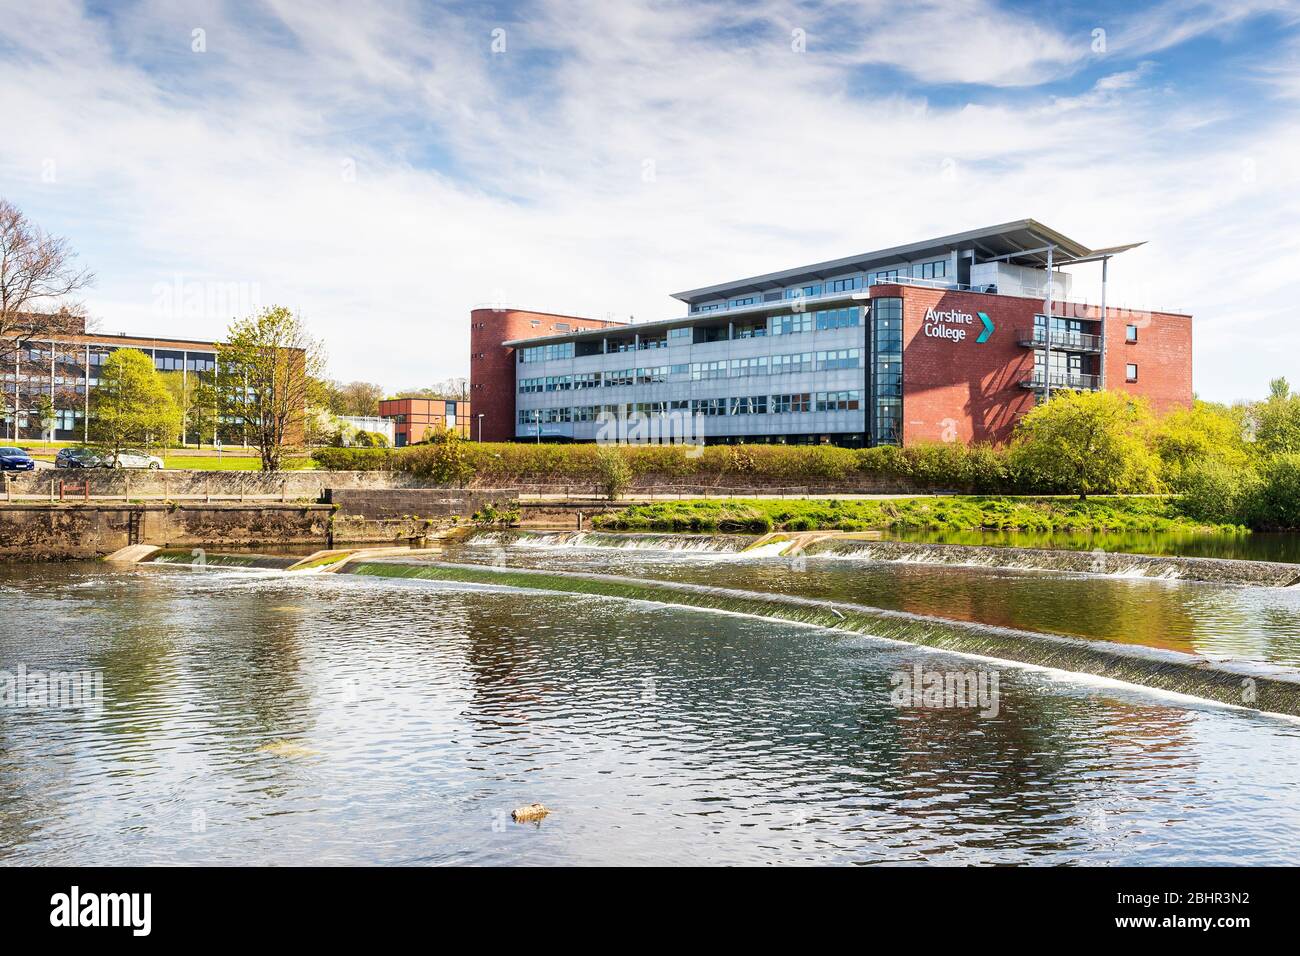 Ayrshire college, Ayr, Ayrshire, Scotland, UK Stock Photo